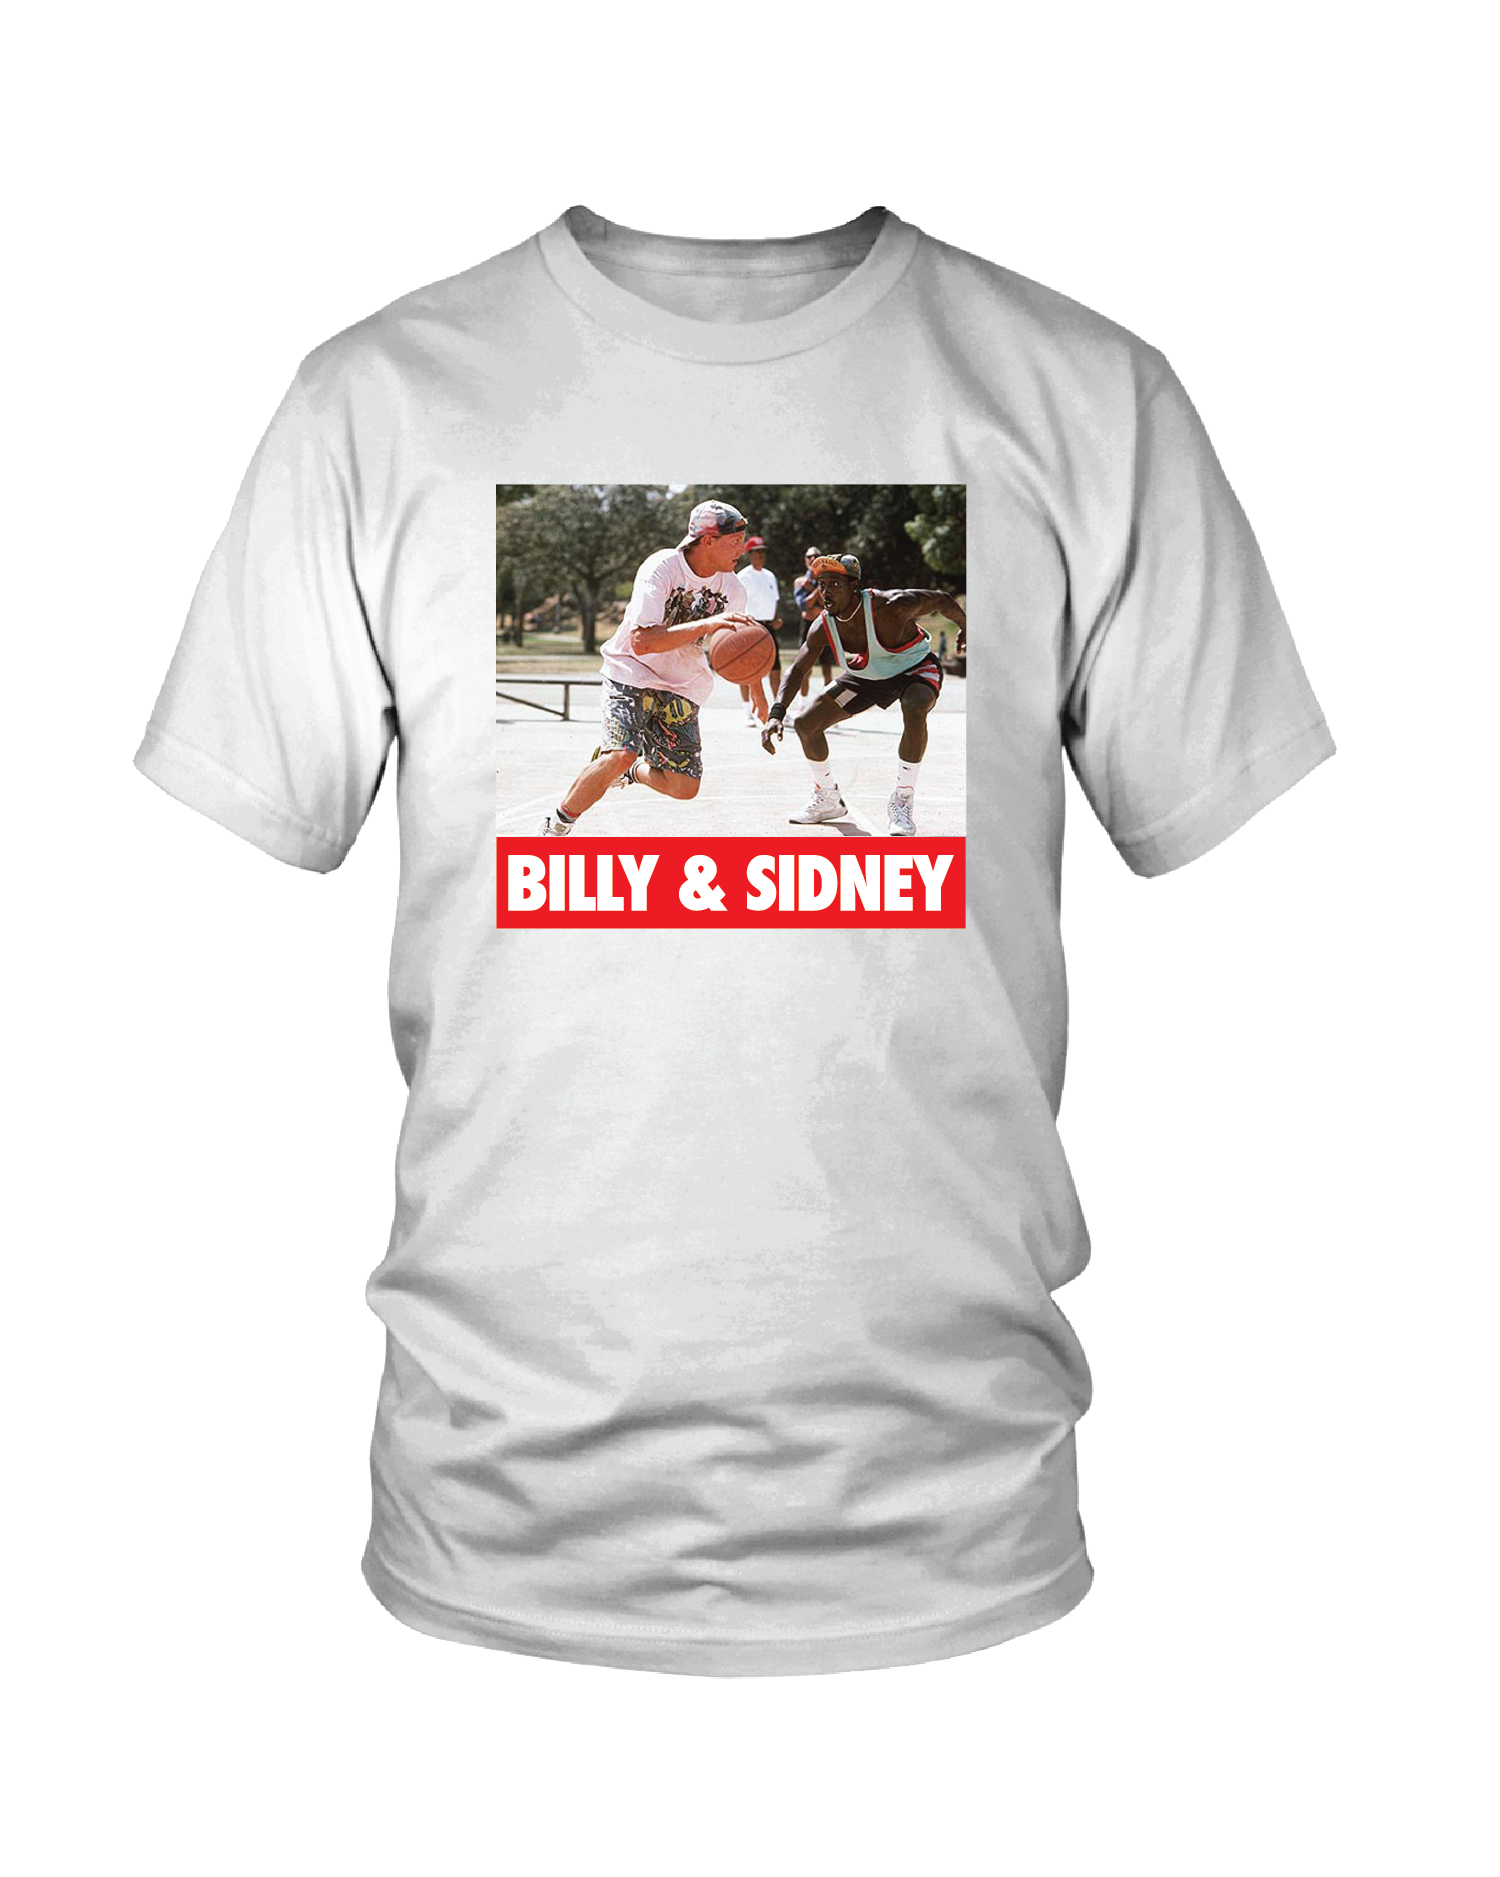 Billy vs Sidney Tee.